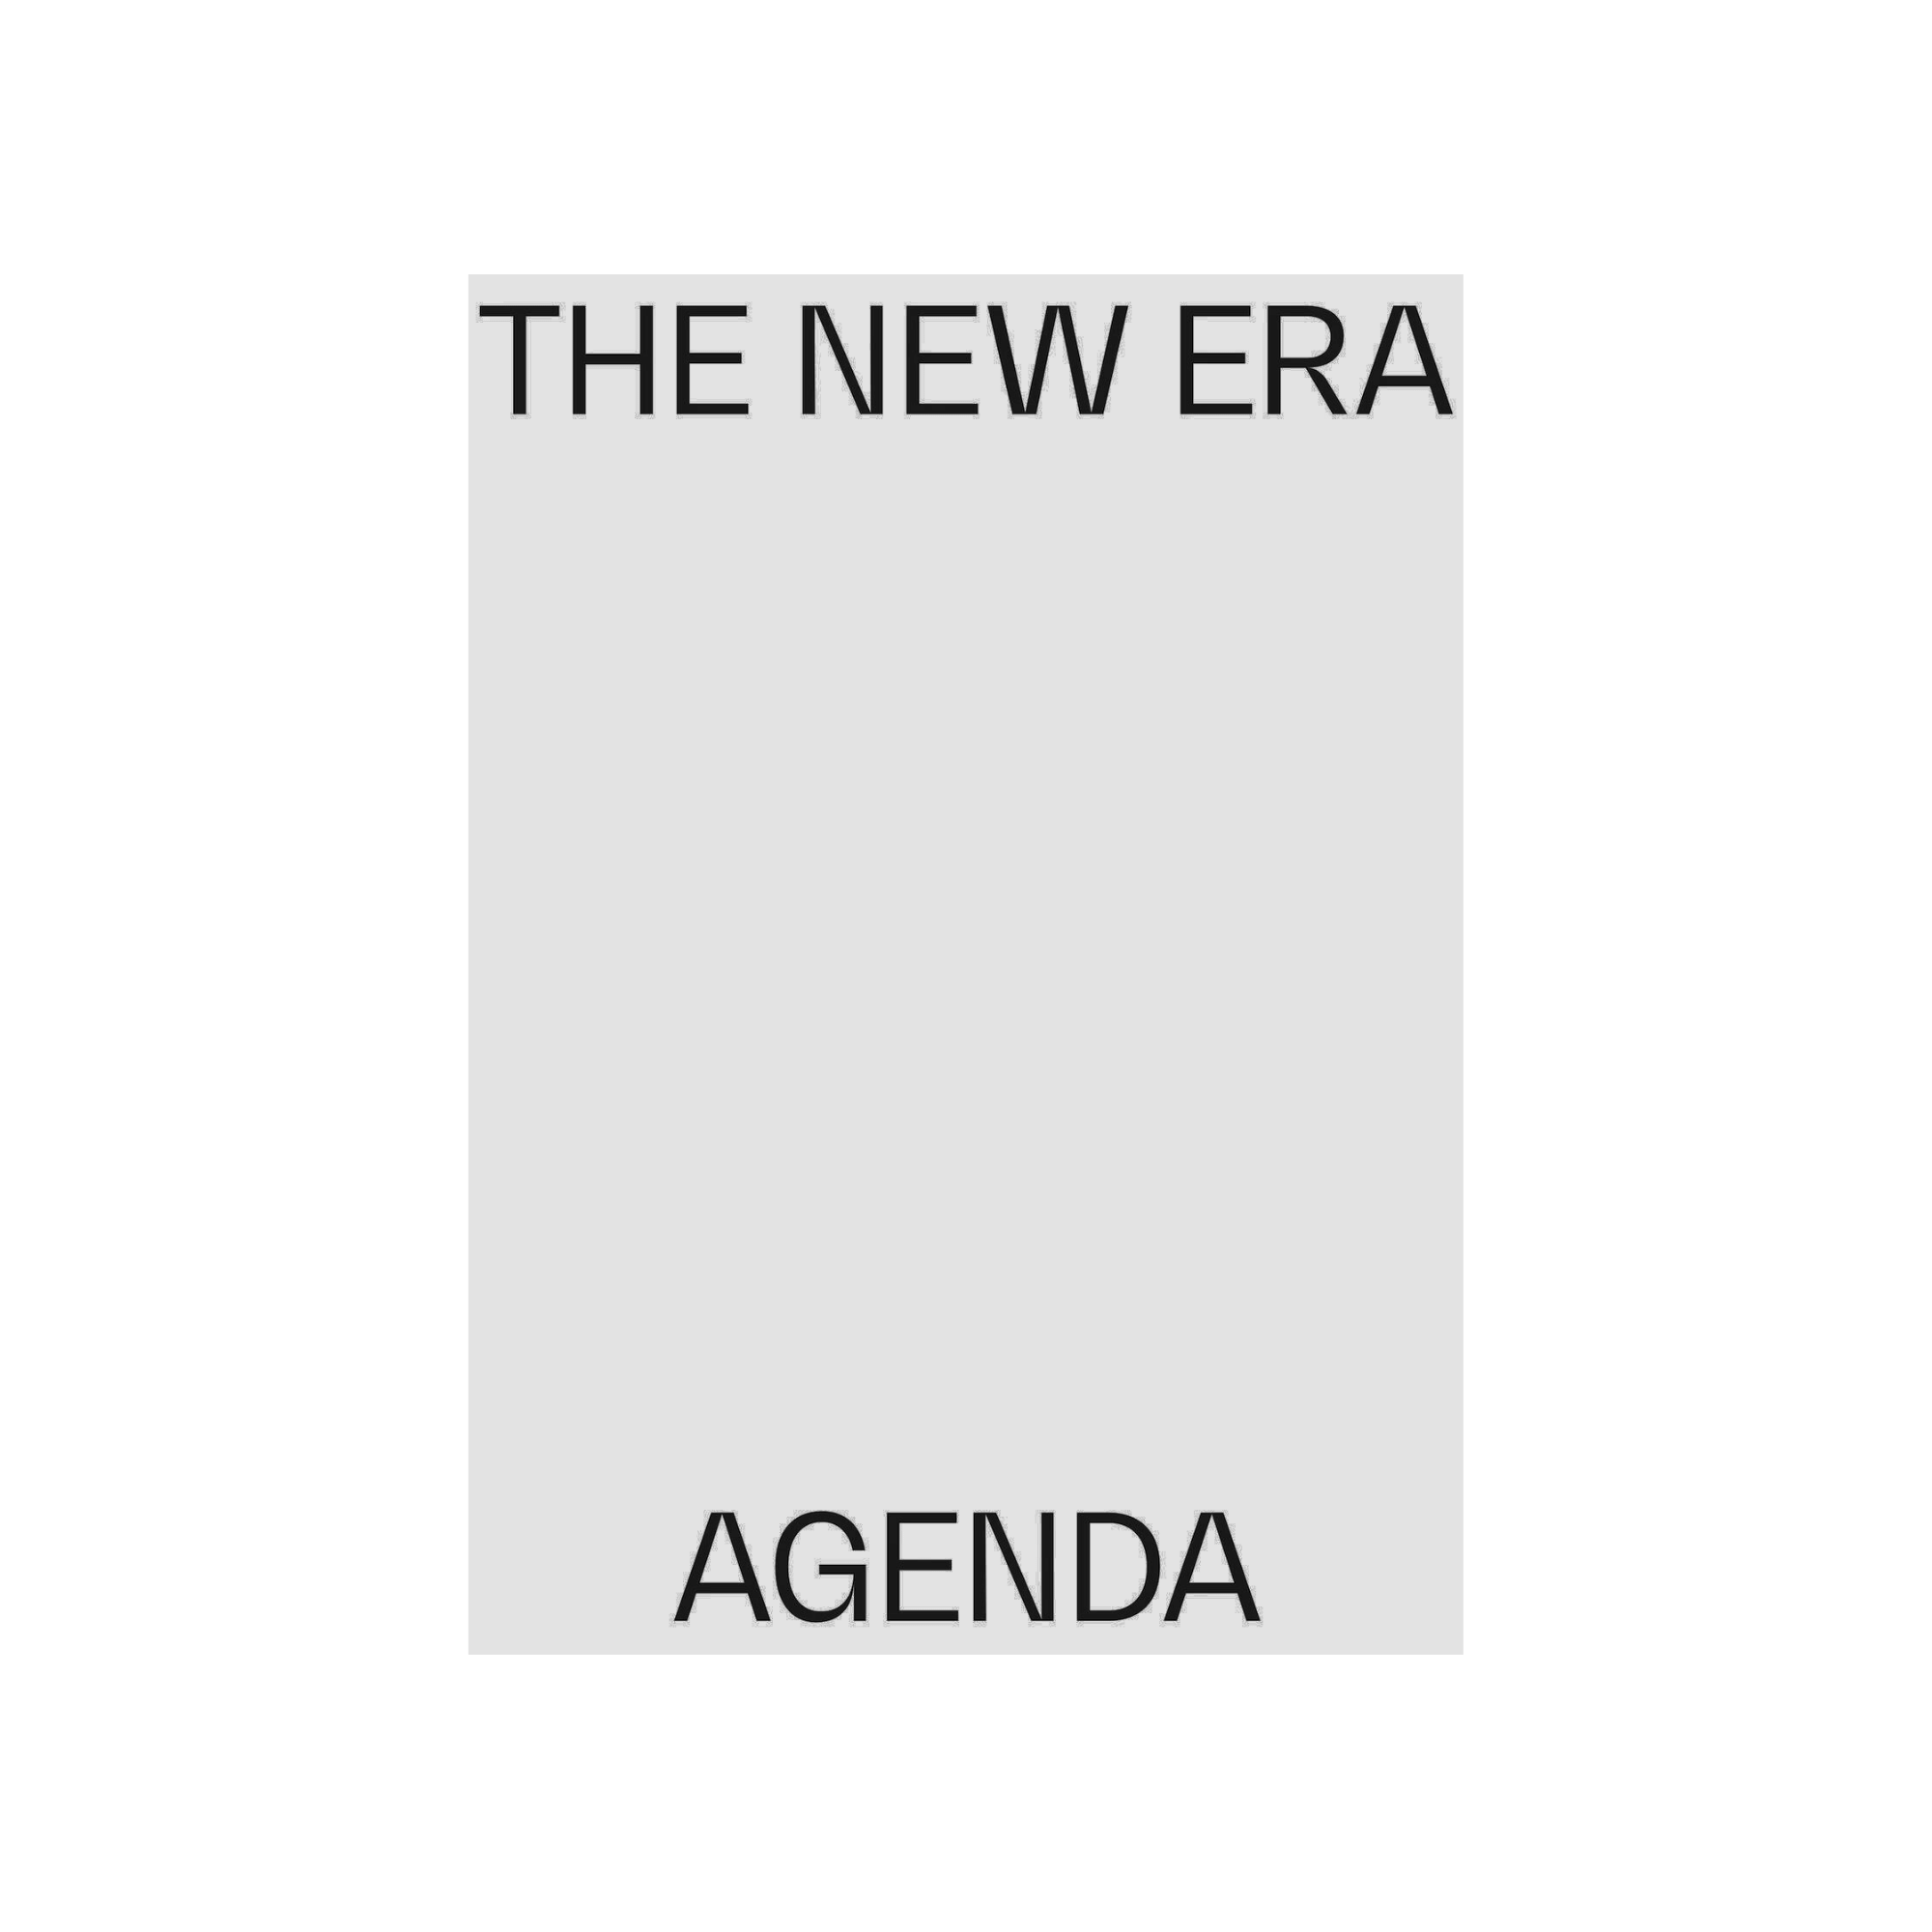 The New Era Agenda - THAT COOL LIVING